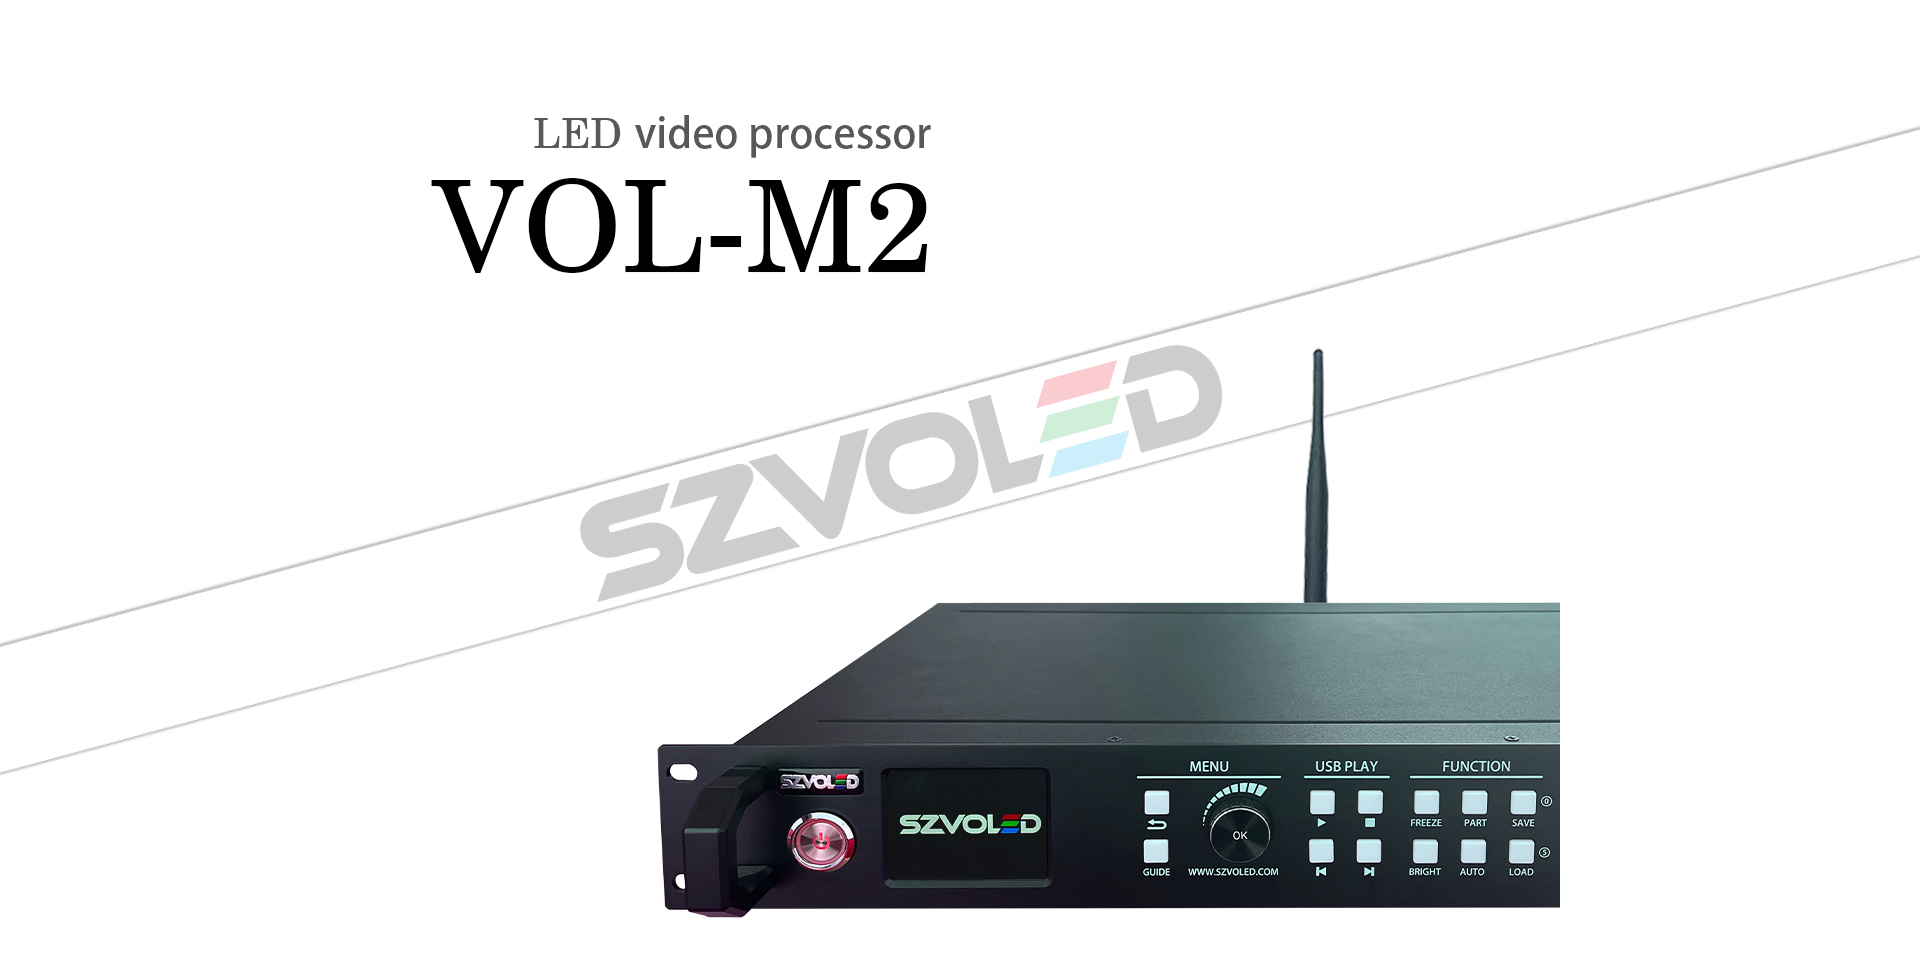 VOL-M2 Video Processor